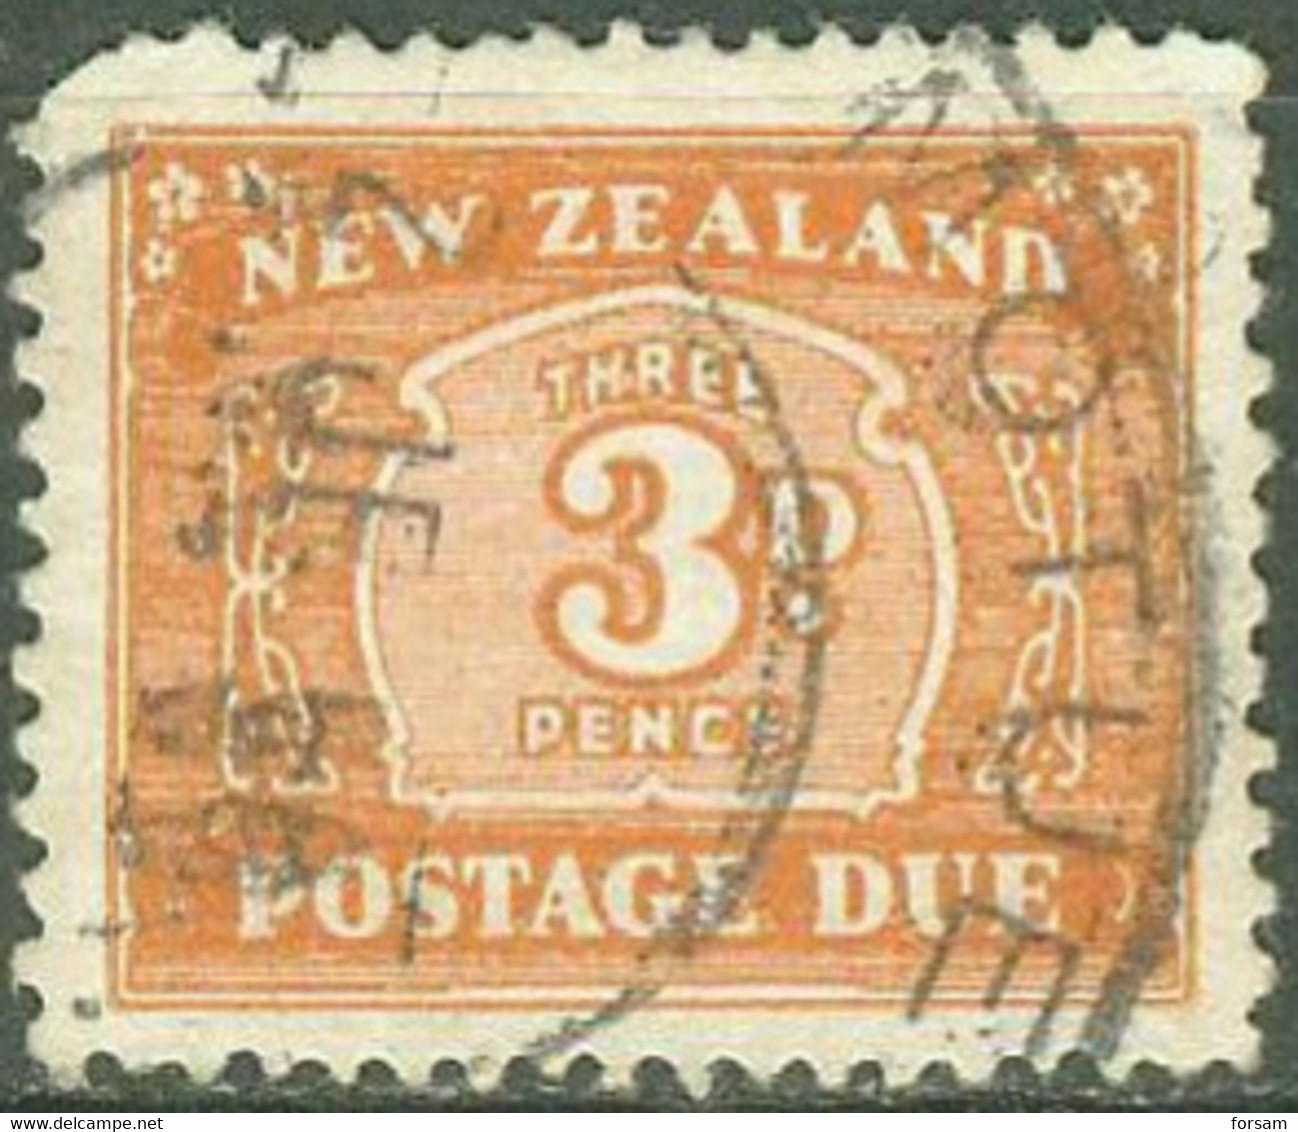 NEW ZEALAND..1945..Michel # 31...used...Postage Due...MiCV - 6.50 Euro. - Gebraucht